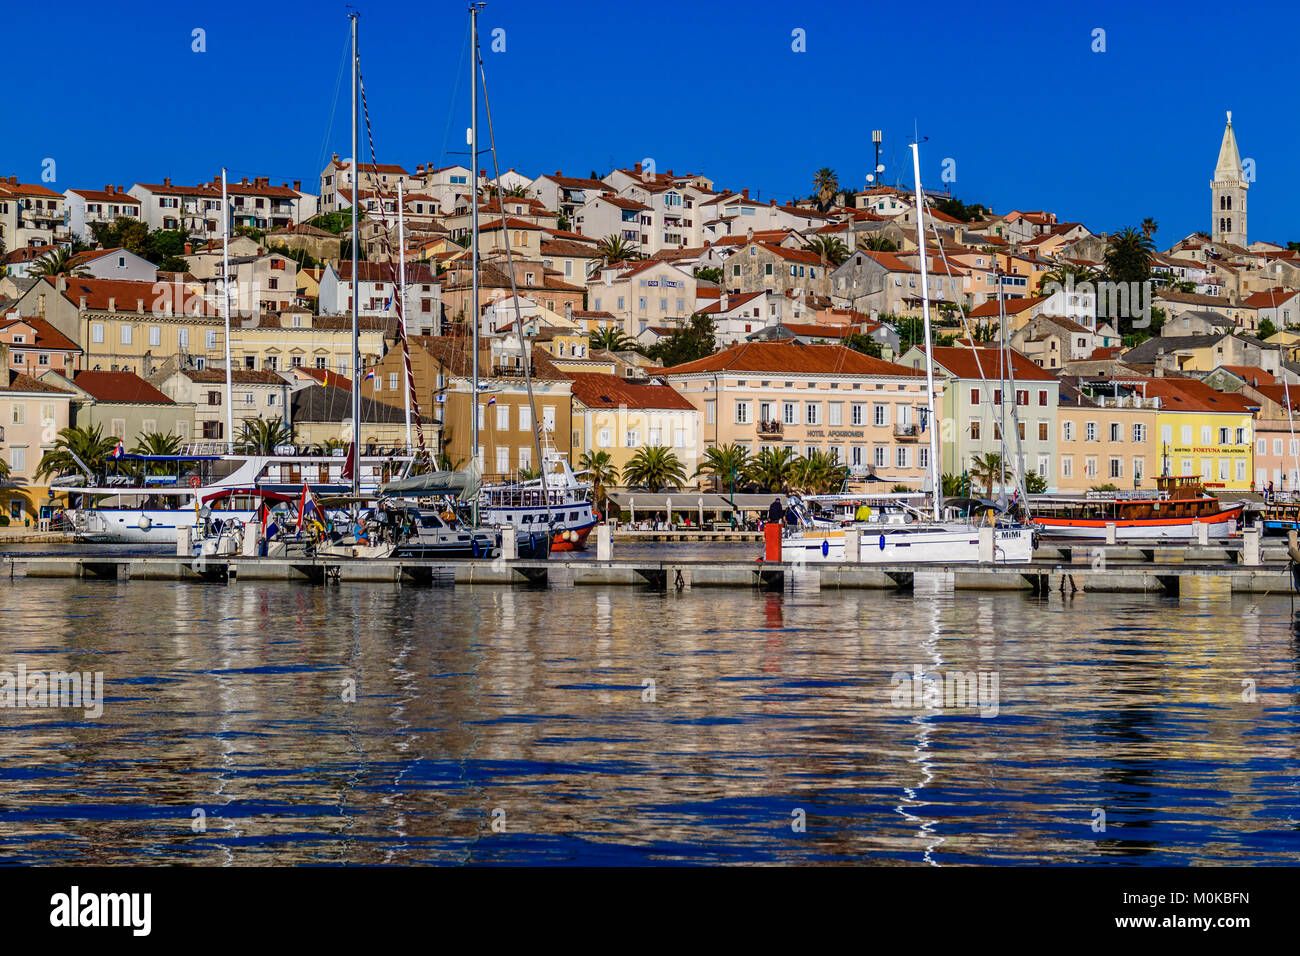 Mali Losinj harbor, sur l'île de Losinj, Croatie. Mai 2017. Banque D'Images